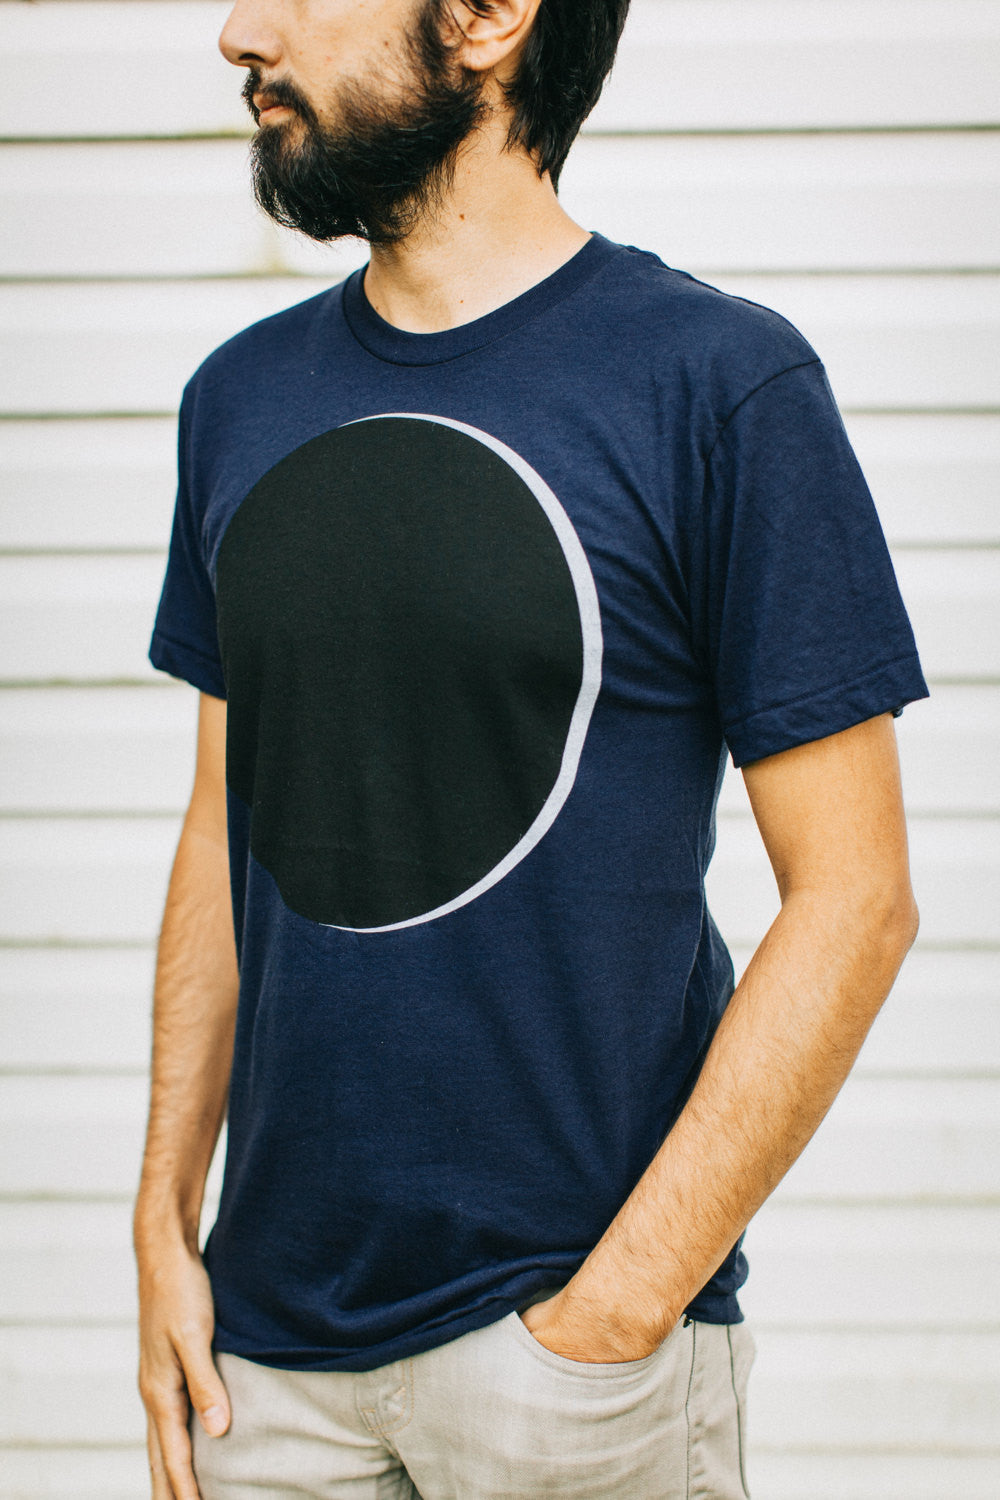 Blackbird Supply Co. Solar Eclipse Full Moon T-Shirt Men's Graphic Tee on Navy Blue 2XL - Mens 49 Chest / Navy Blue